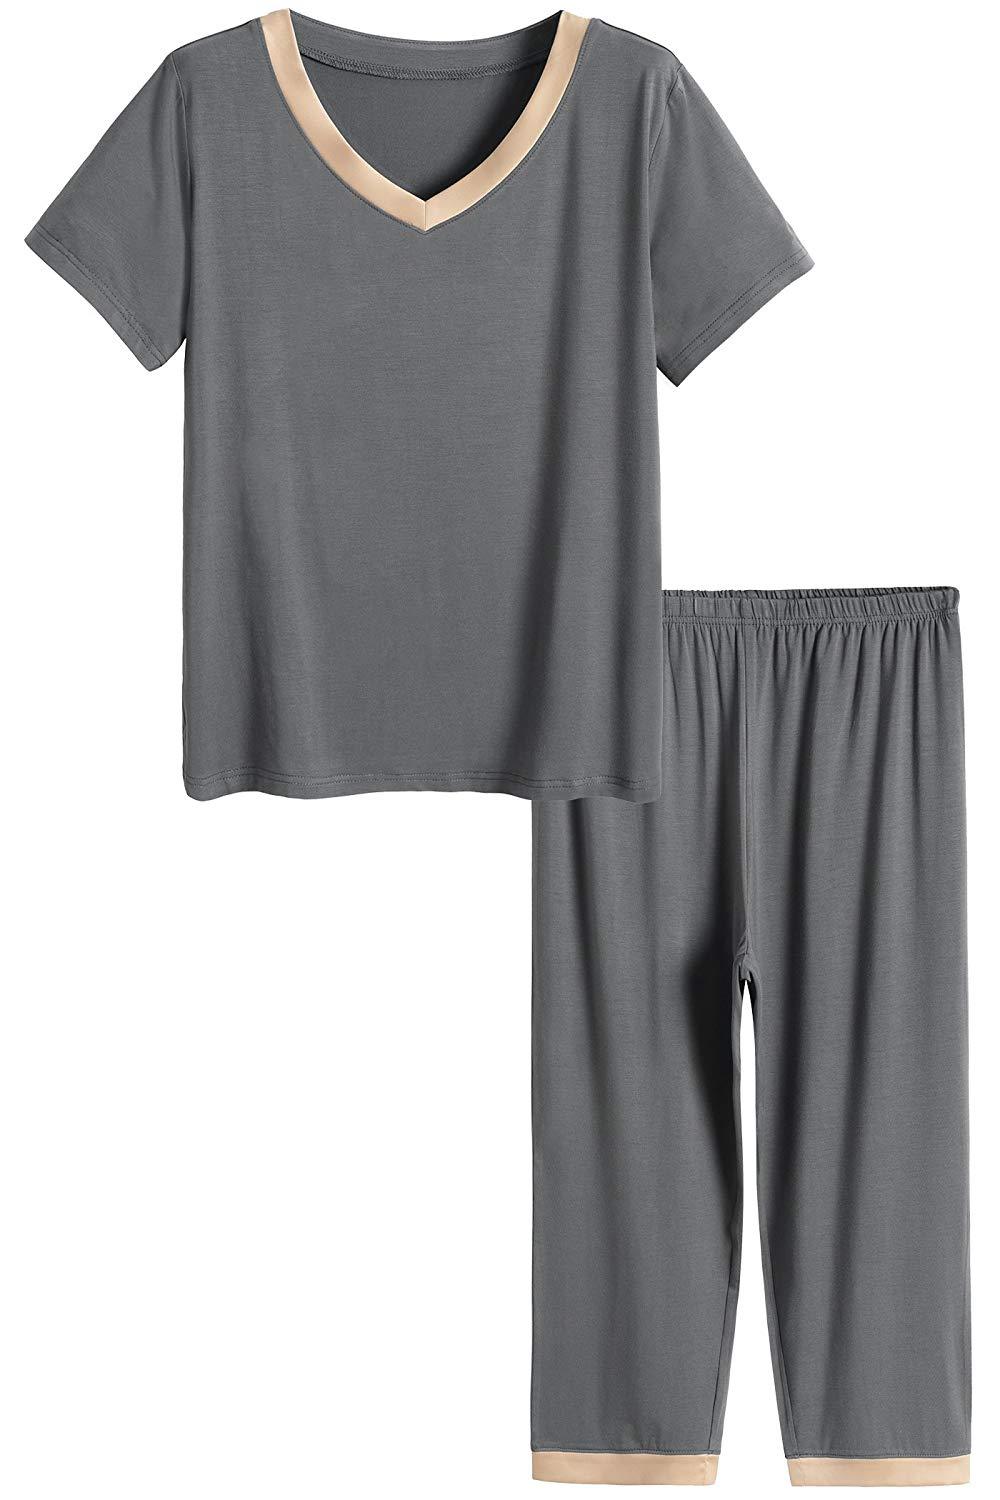 Capri Pants Pajamas Set – Latuza